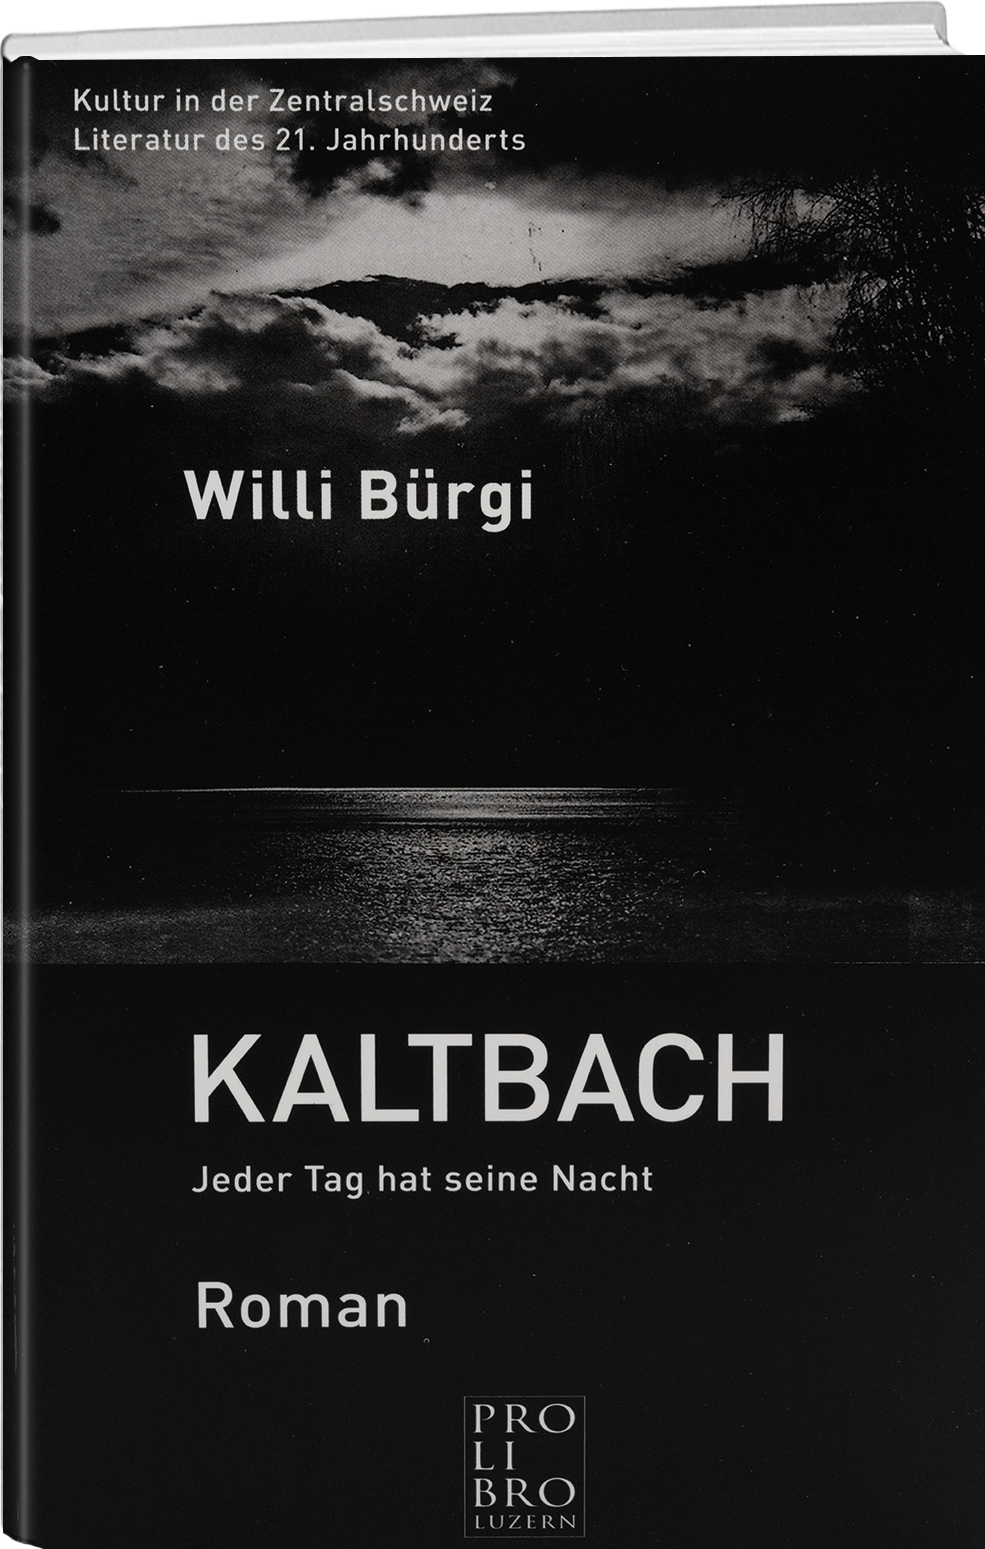 Willi Bürgi: Kaltbach – Jeder Tag hat seine Nacht - prolibro.ch